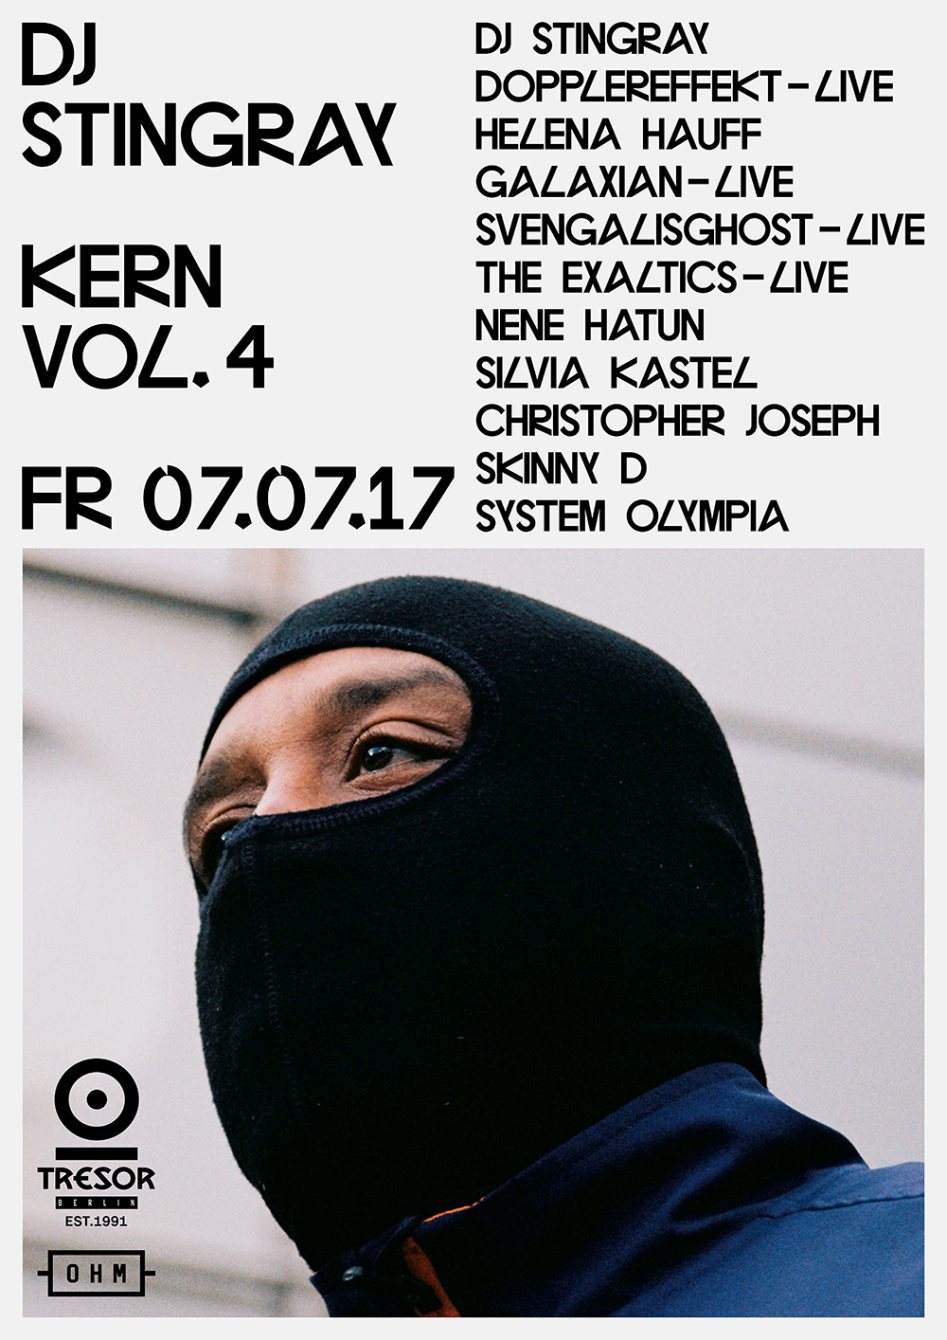 Tresor & DJ Stingray Pres. Kern Vol. 4 Record Release - Página frontal